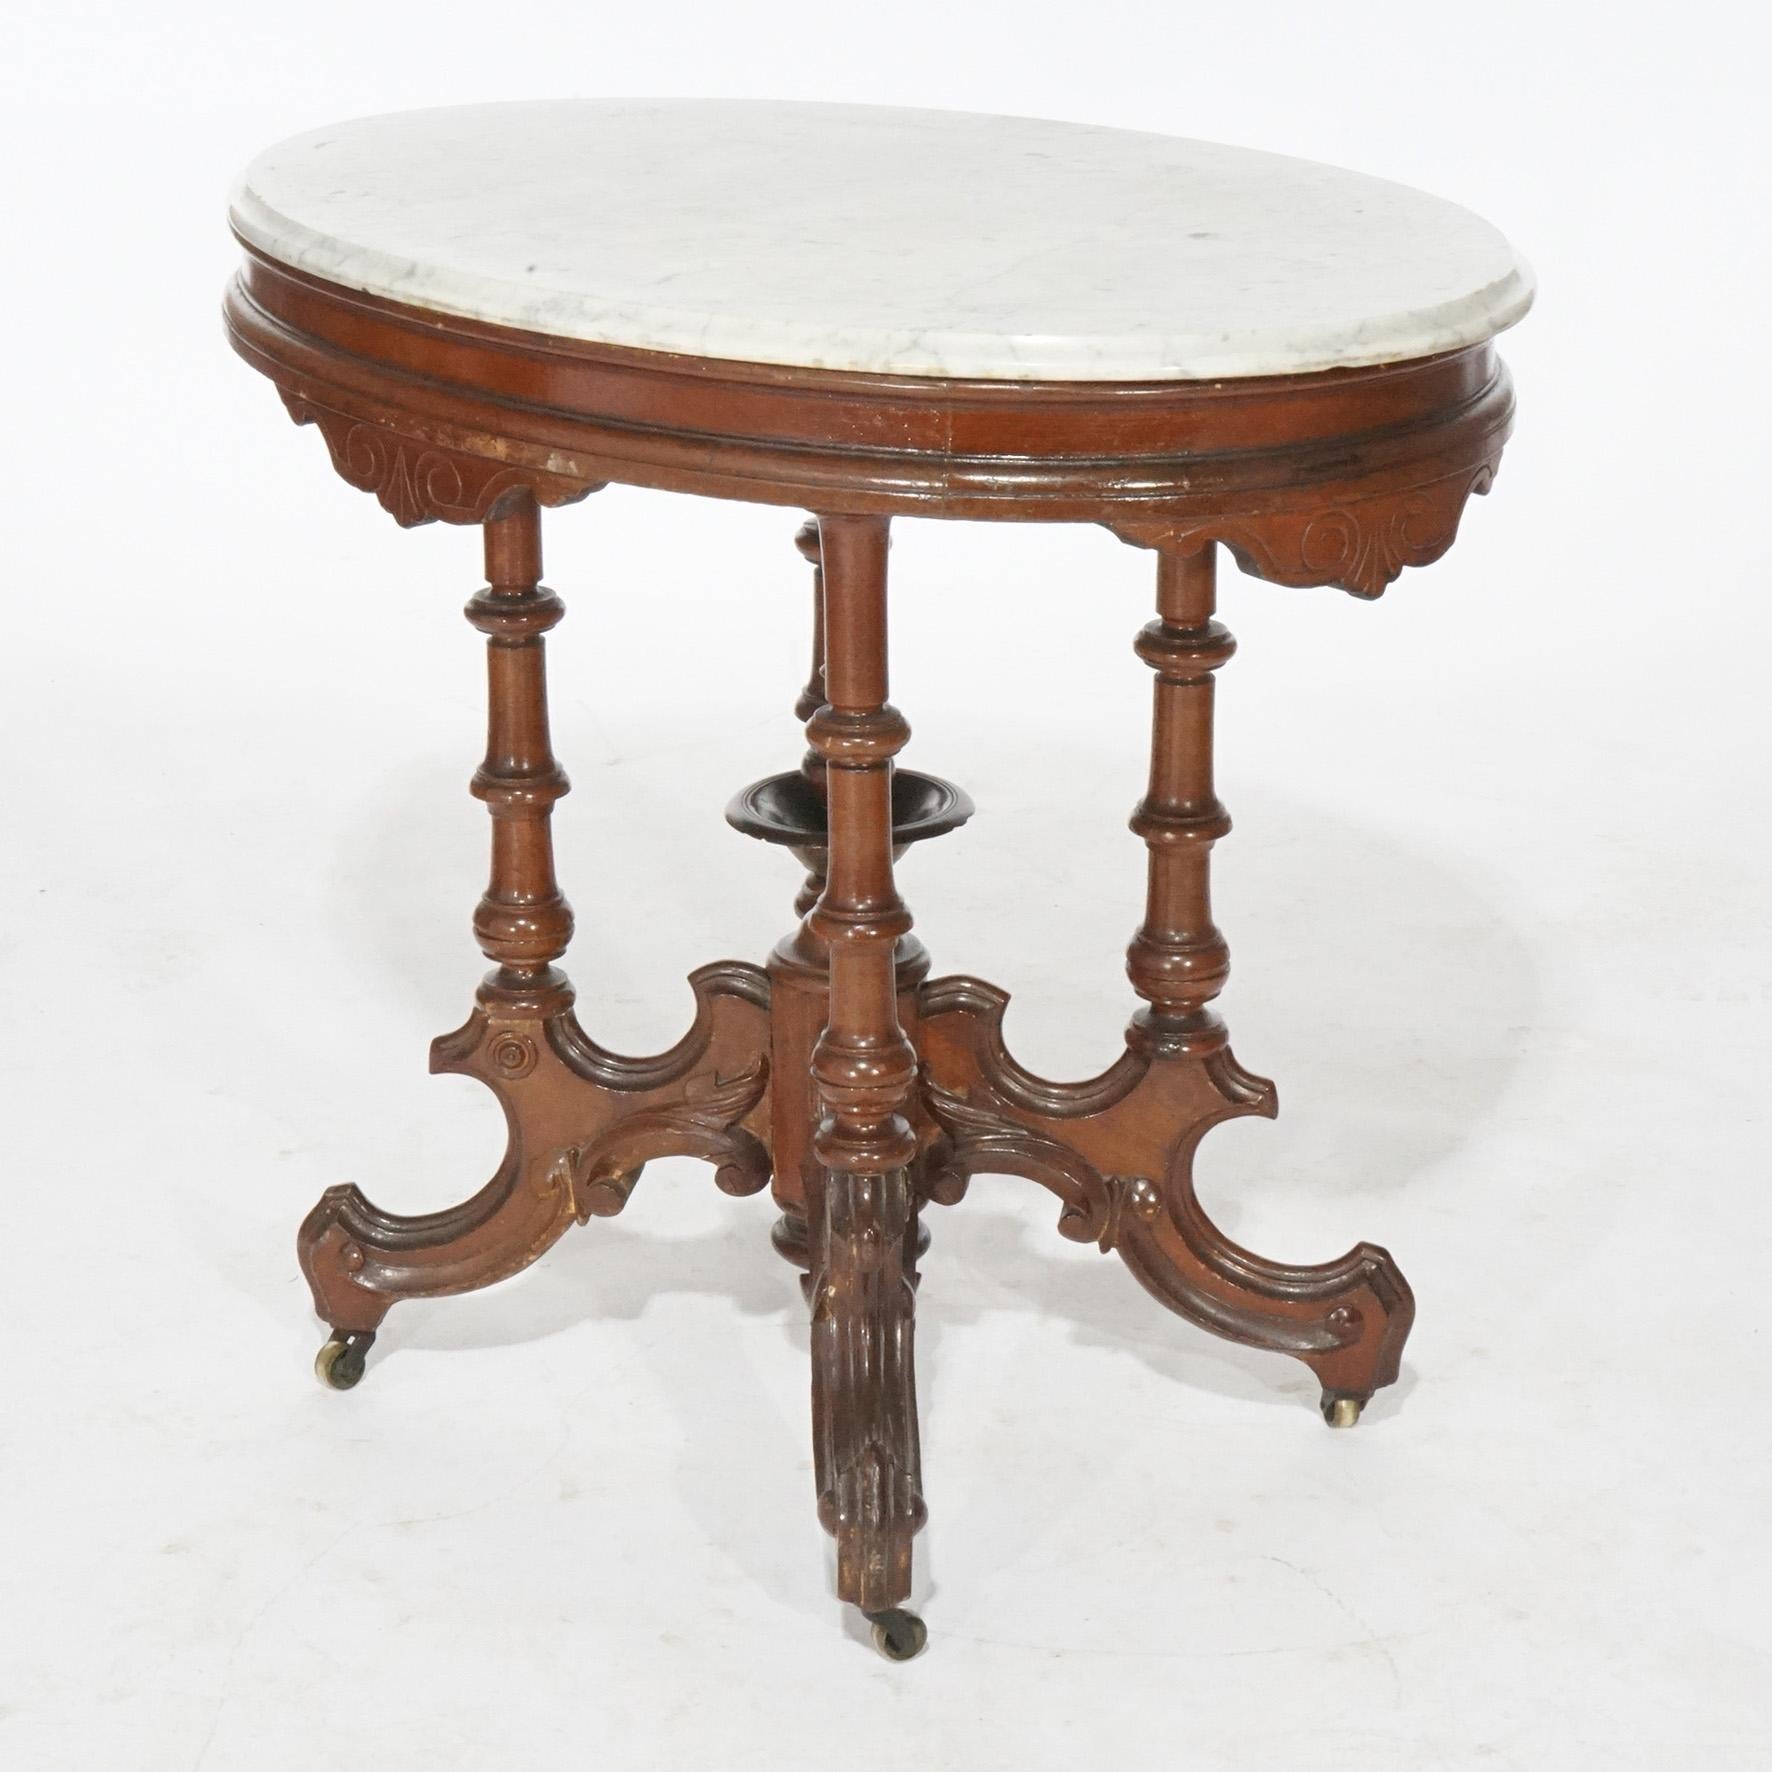 Antique Renaissance Revival Walnut Oval Marble Top Parlor Table, circa 1890 For Sale 2